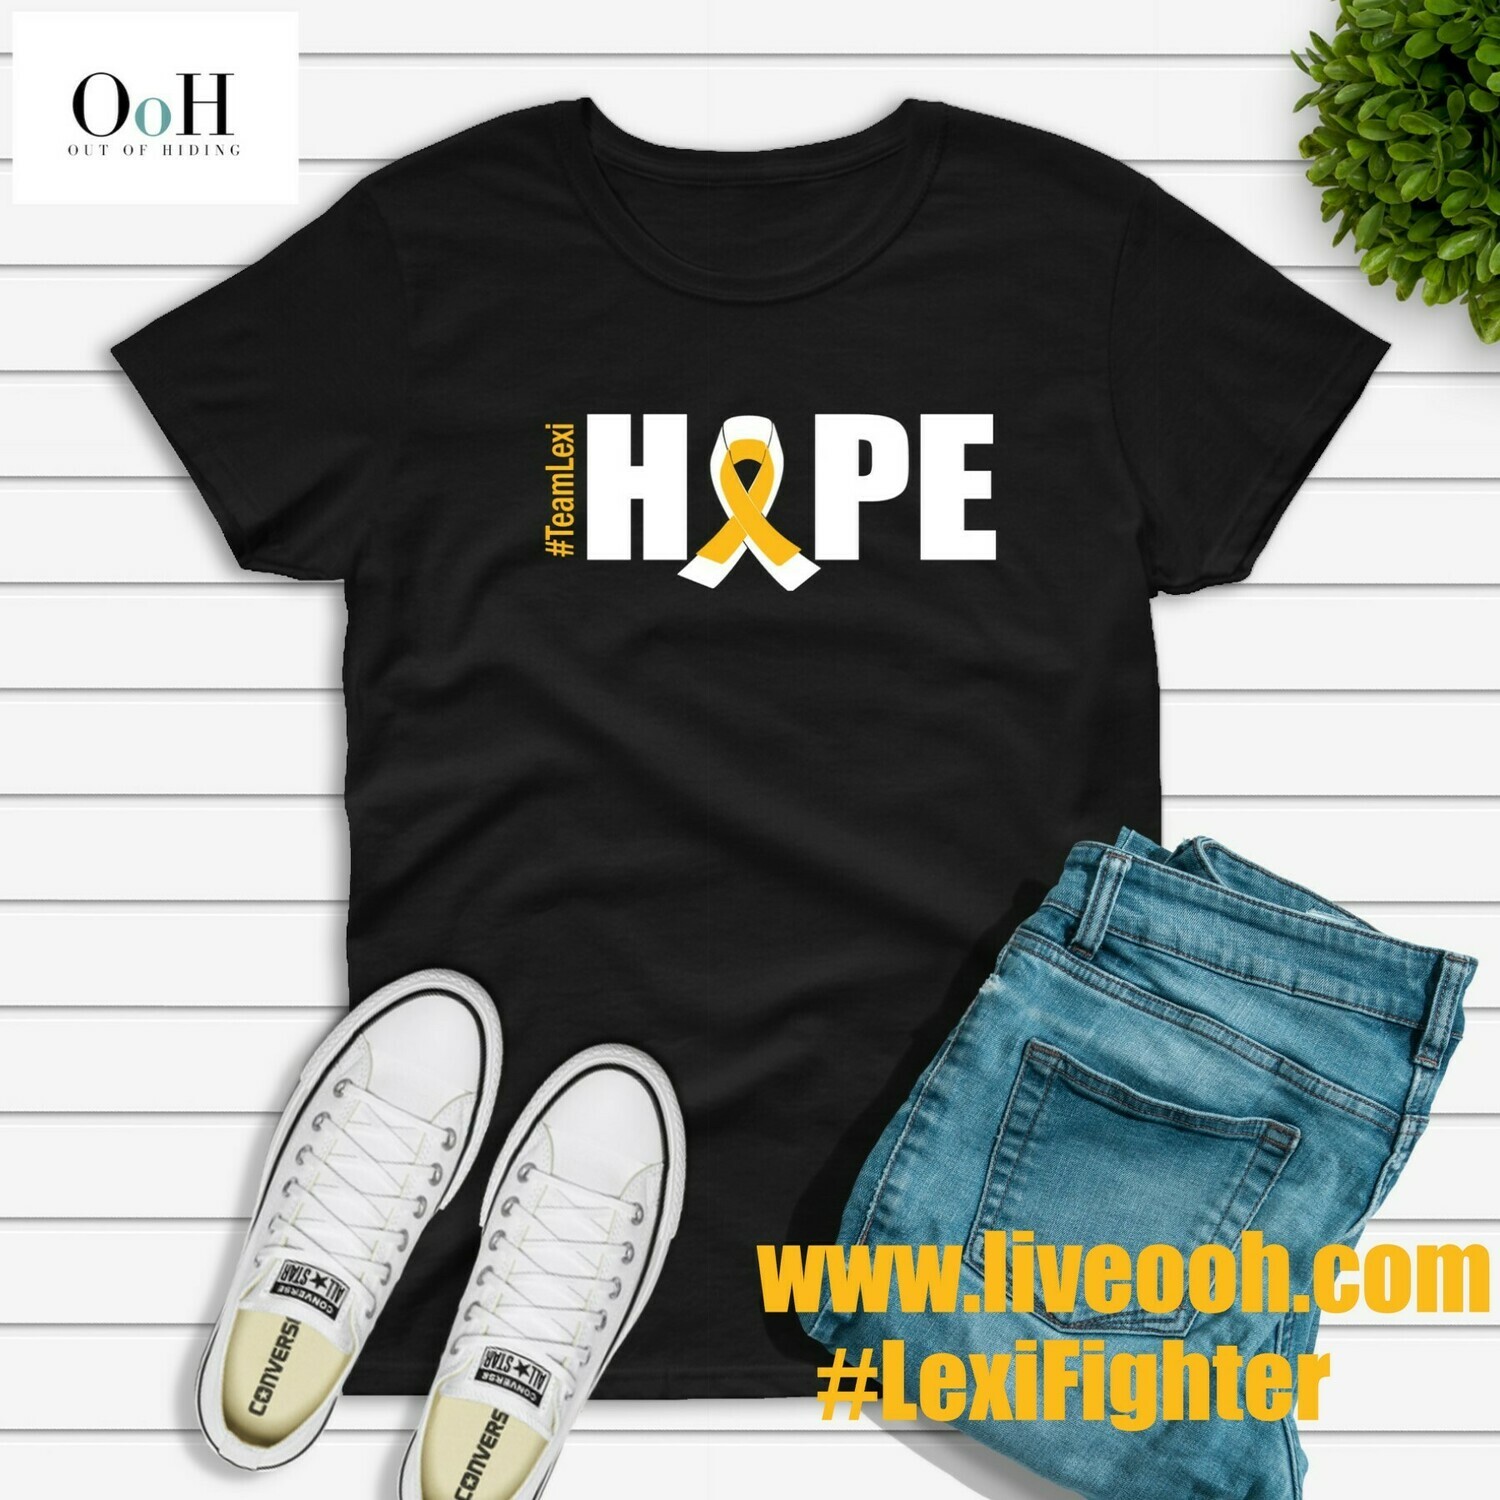 HOPE - #TeamLexi